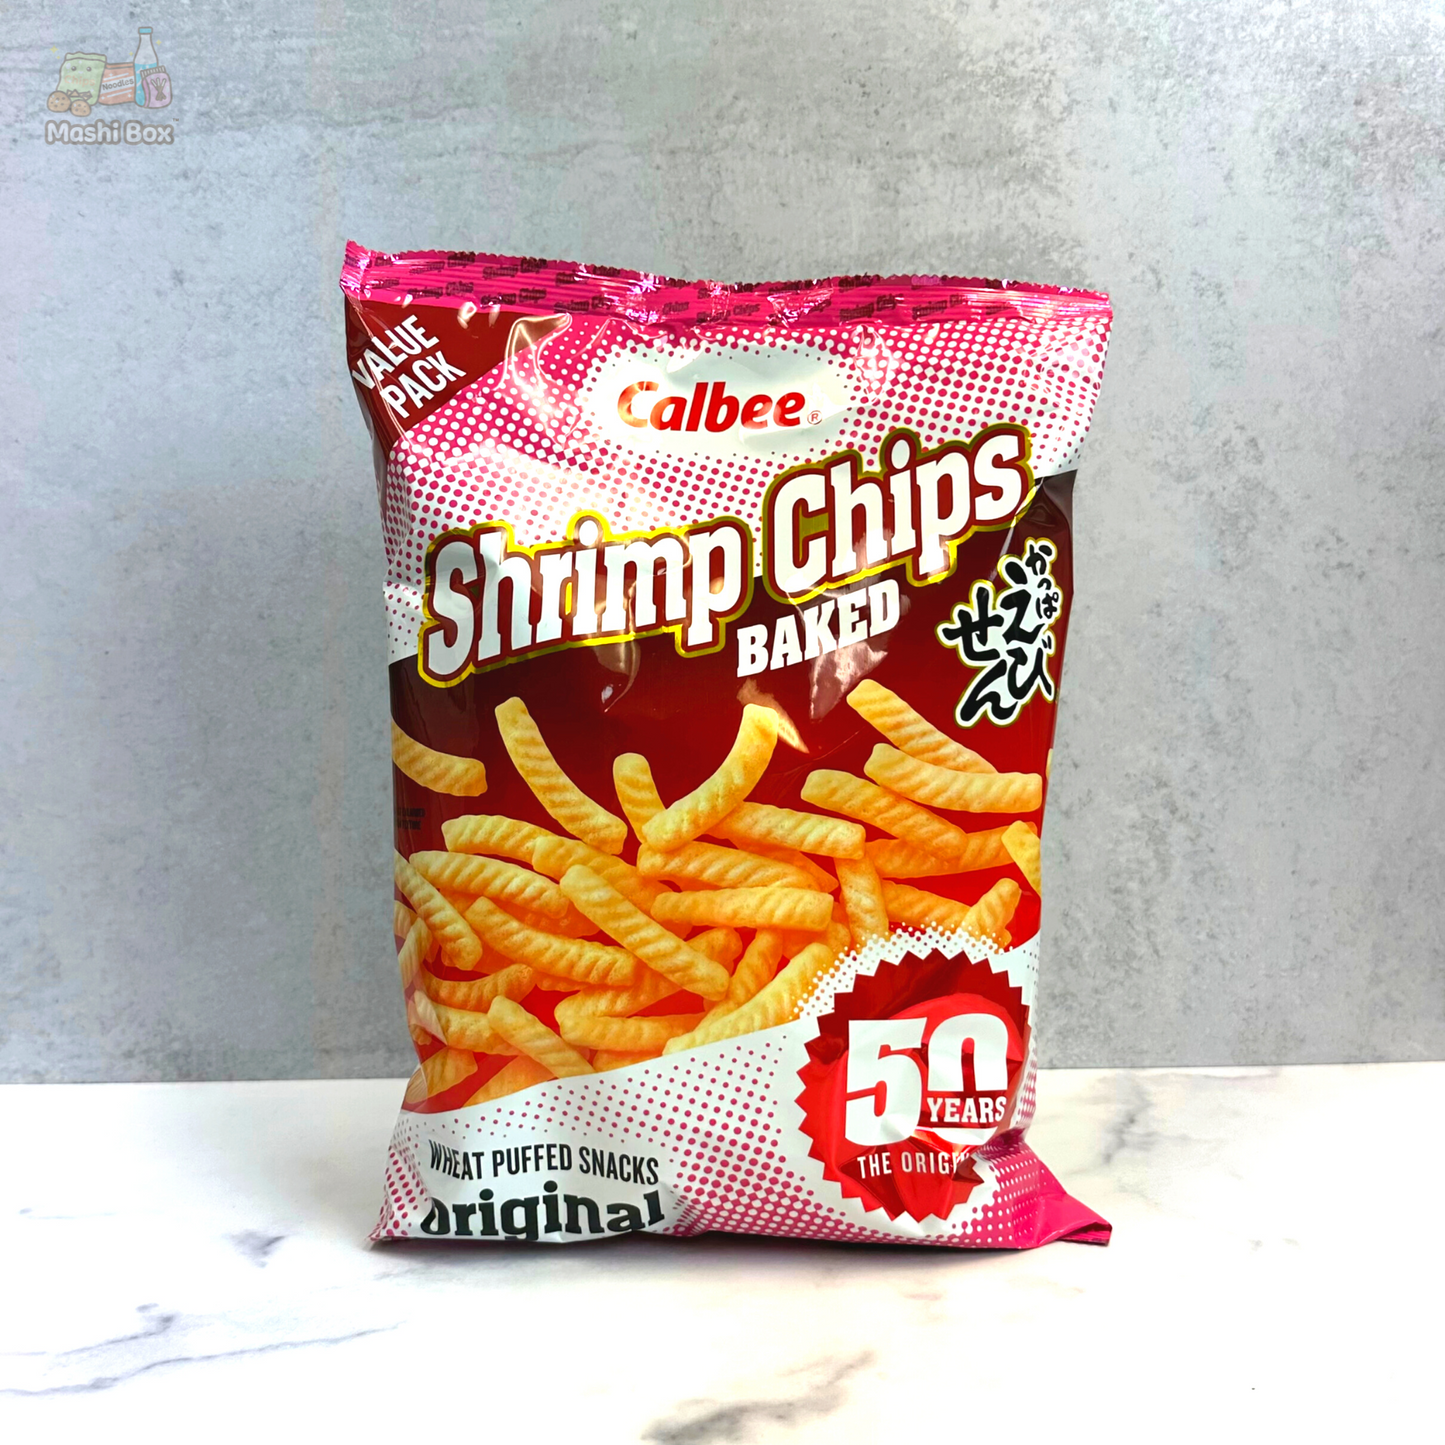 Calbee Original Shrimp Chips (Large)